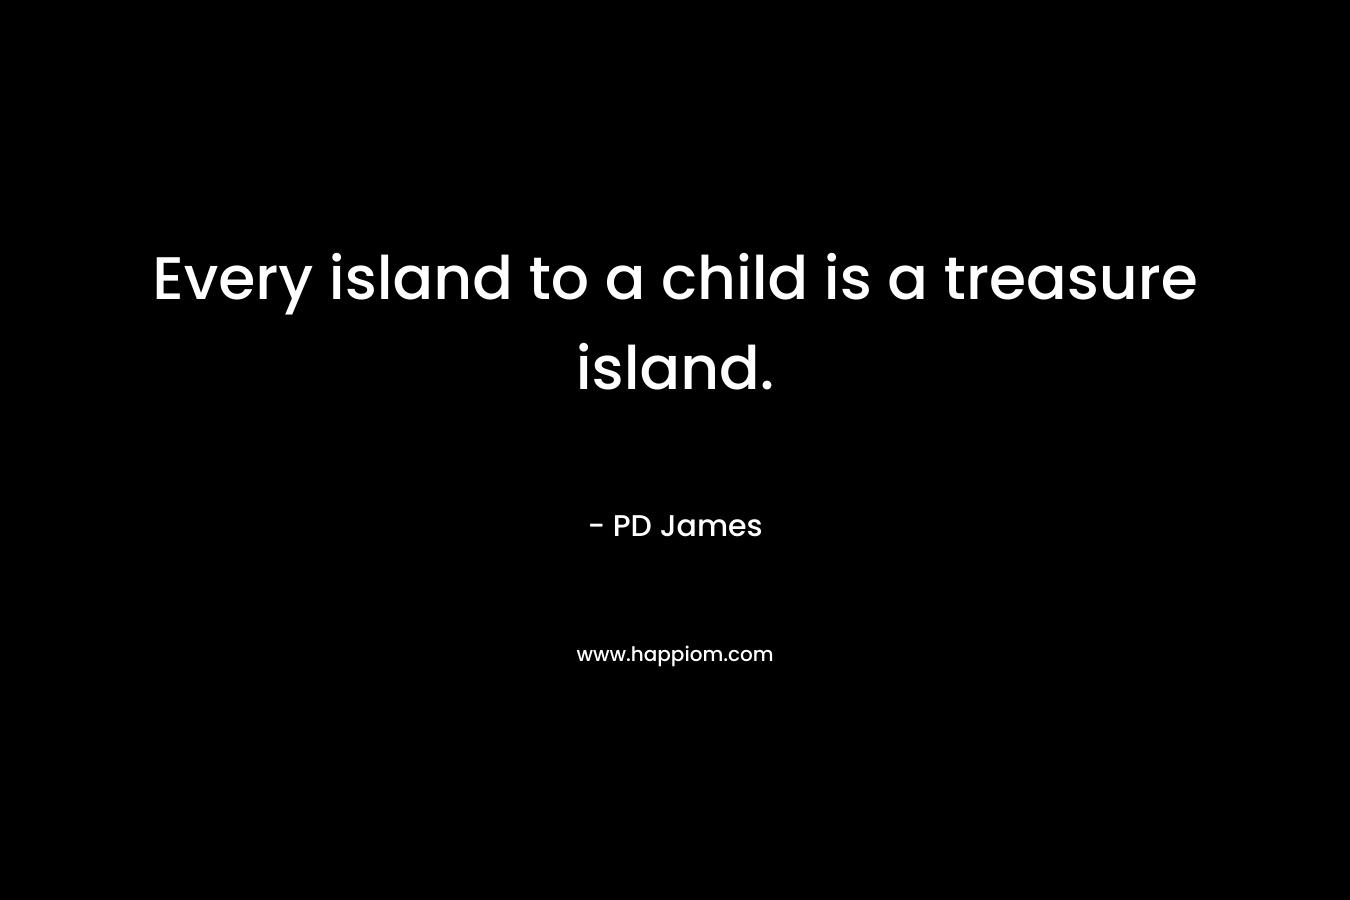 Every island to a child is a treasure island.